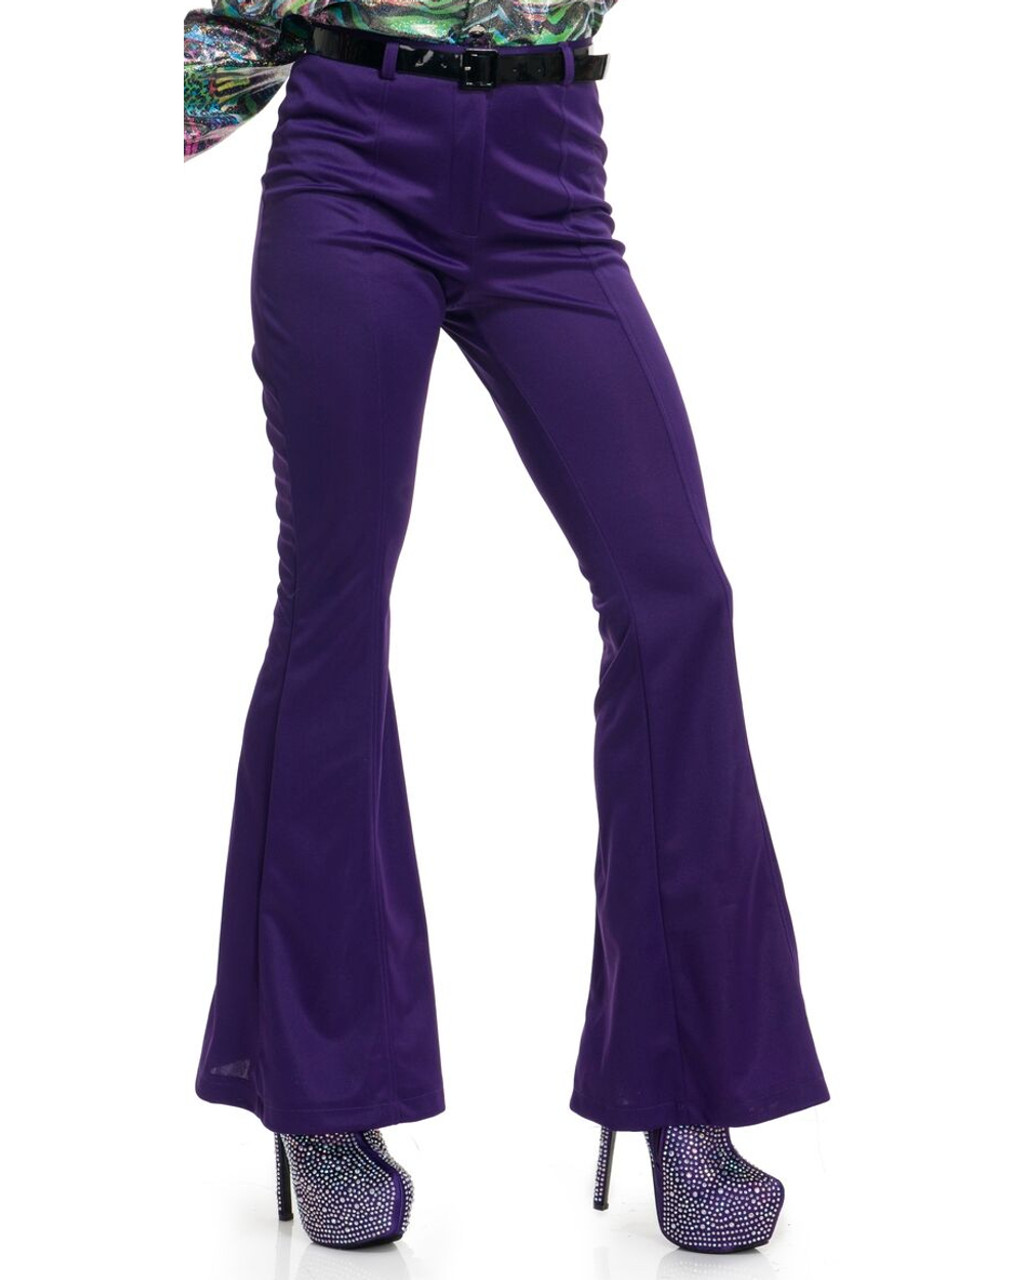 Purple Bell Bottoms Pants for Women, Flared Pants Women, High